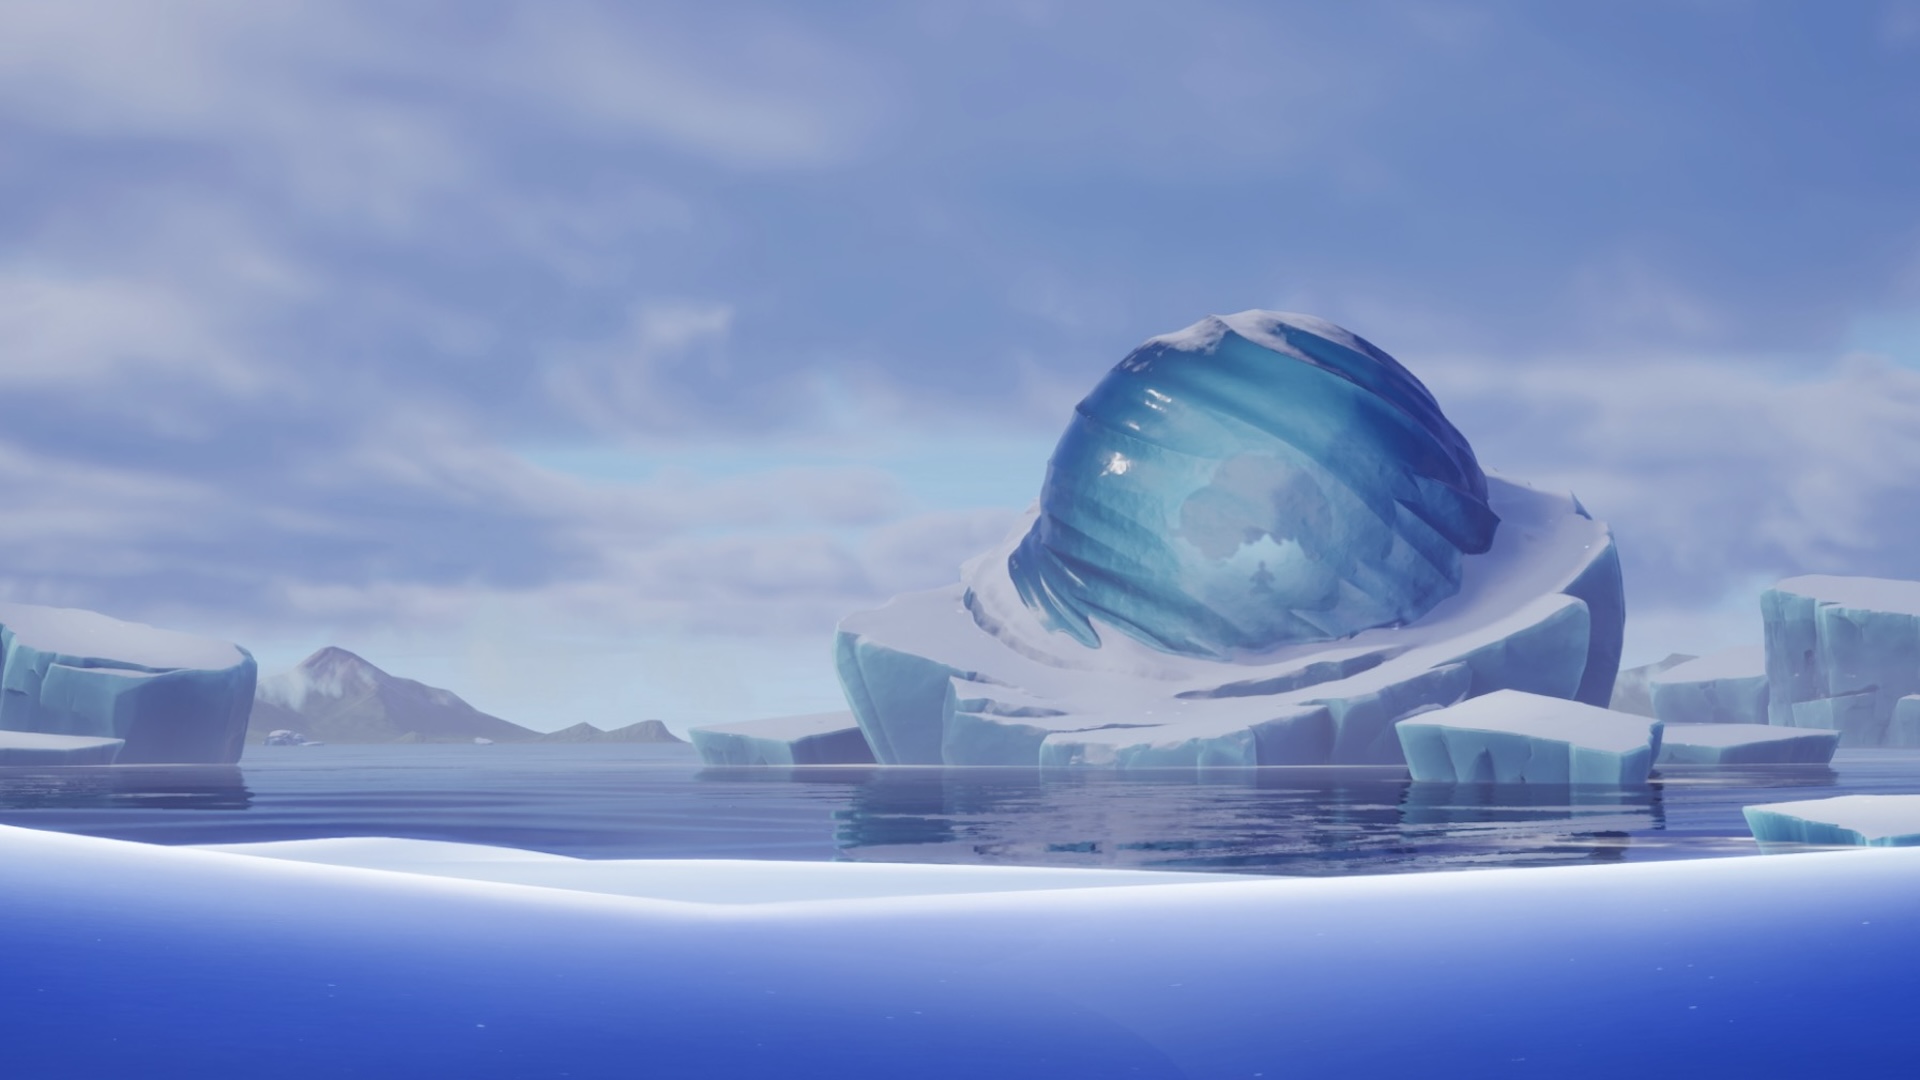 An icy orb, sitting in a snowy plain